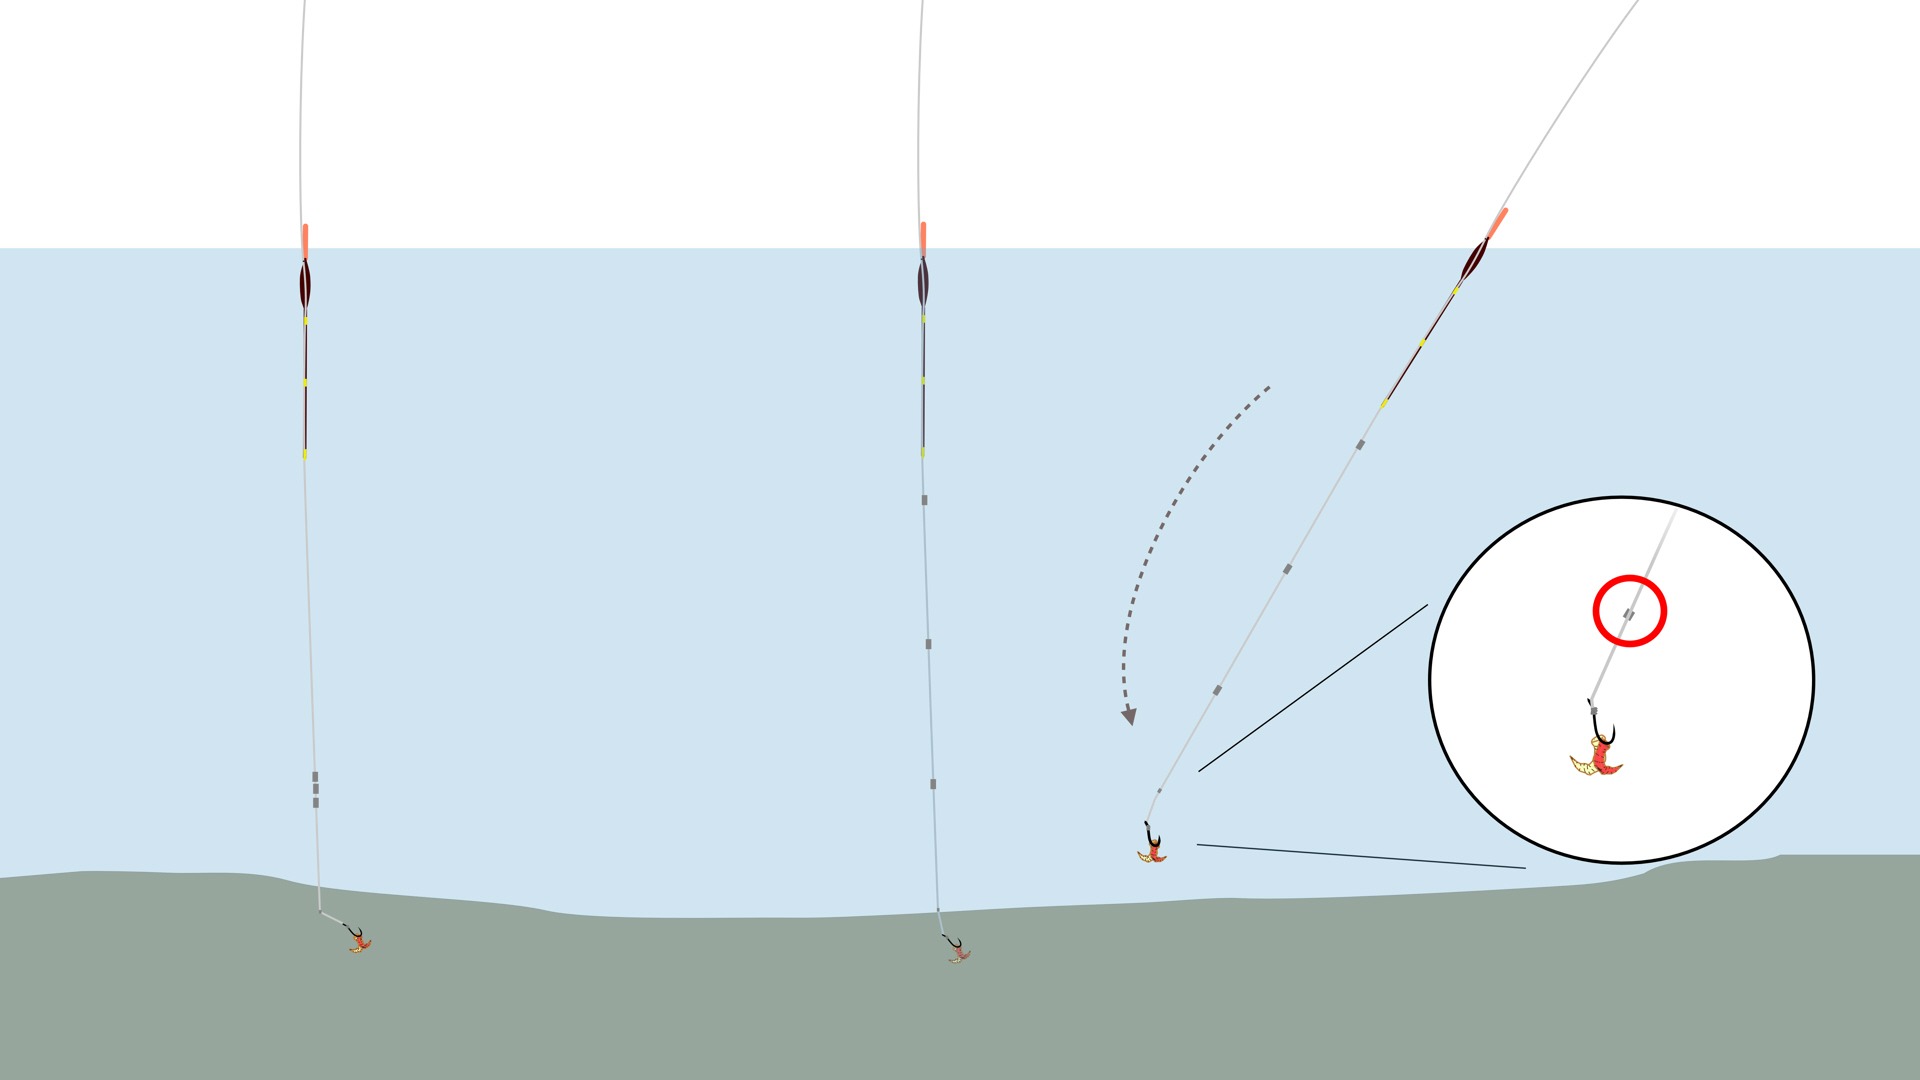 Shotting Patterns for pole float fishing